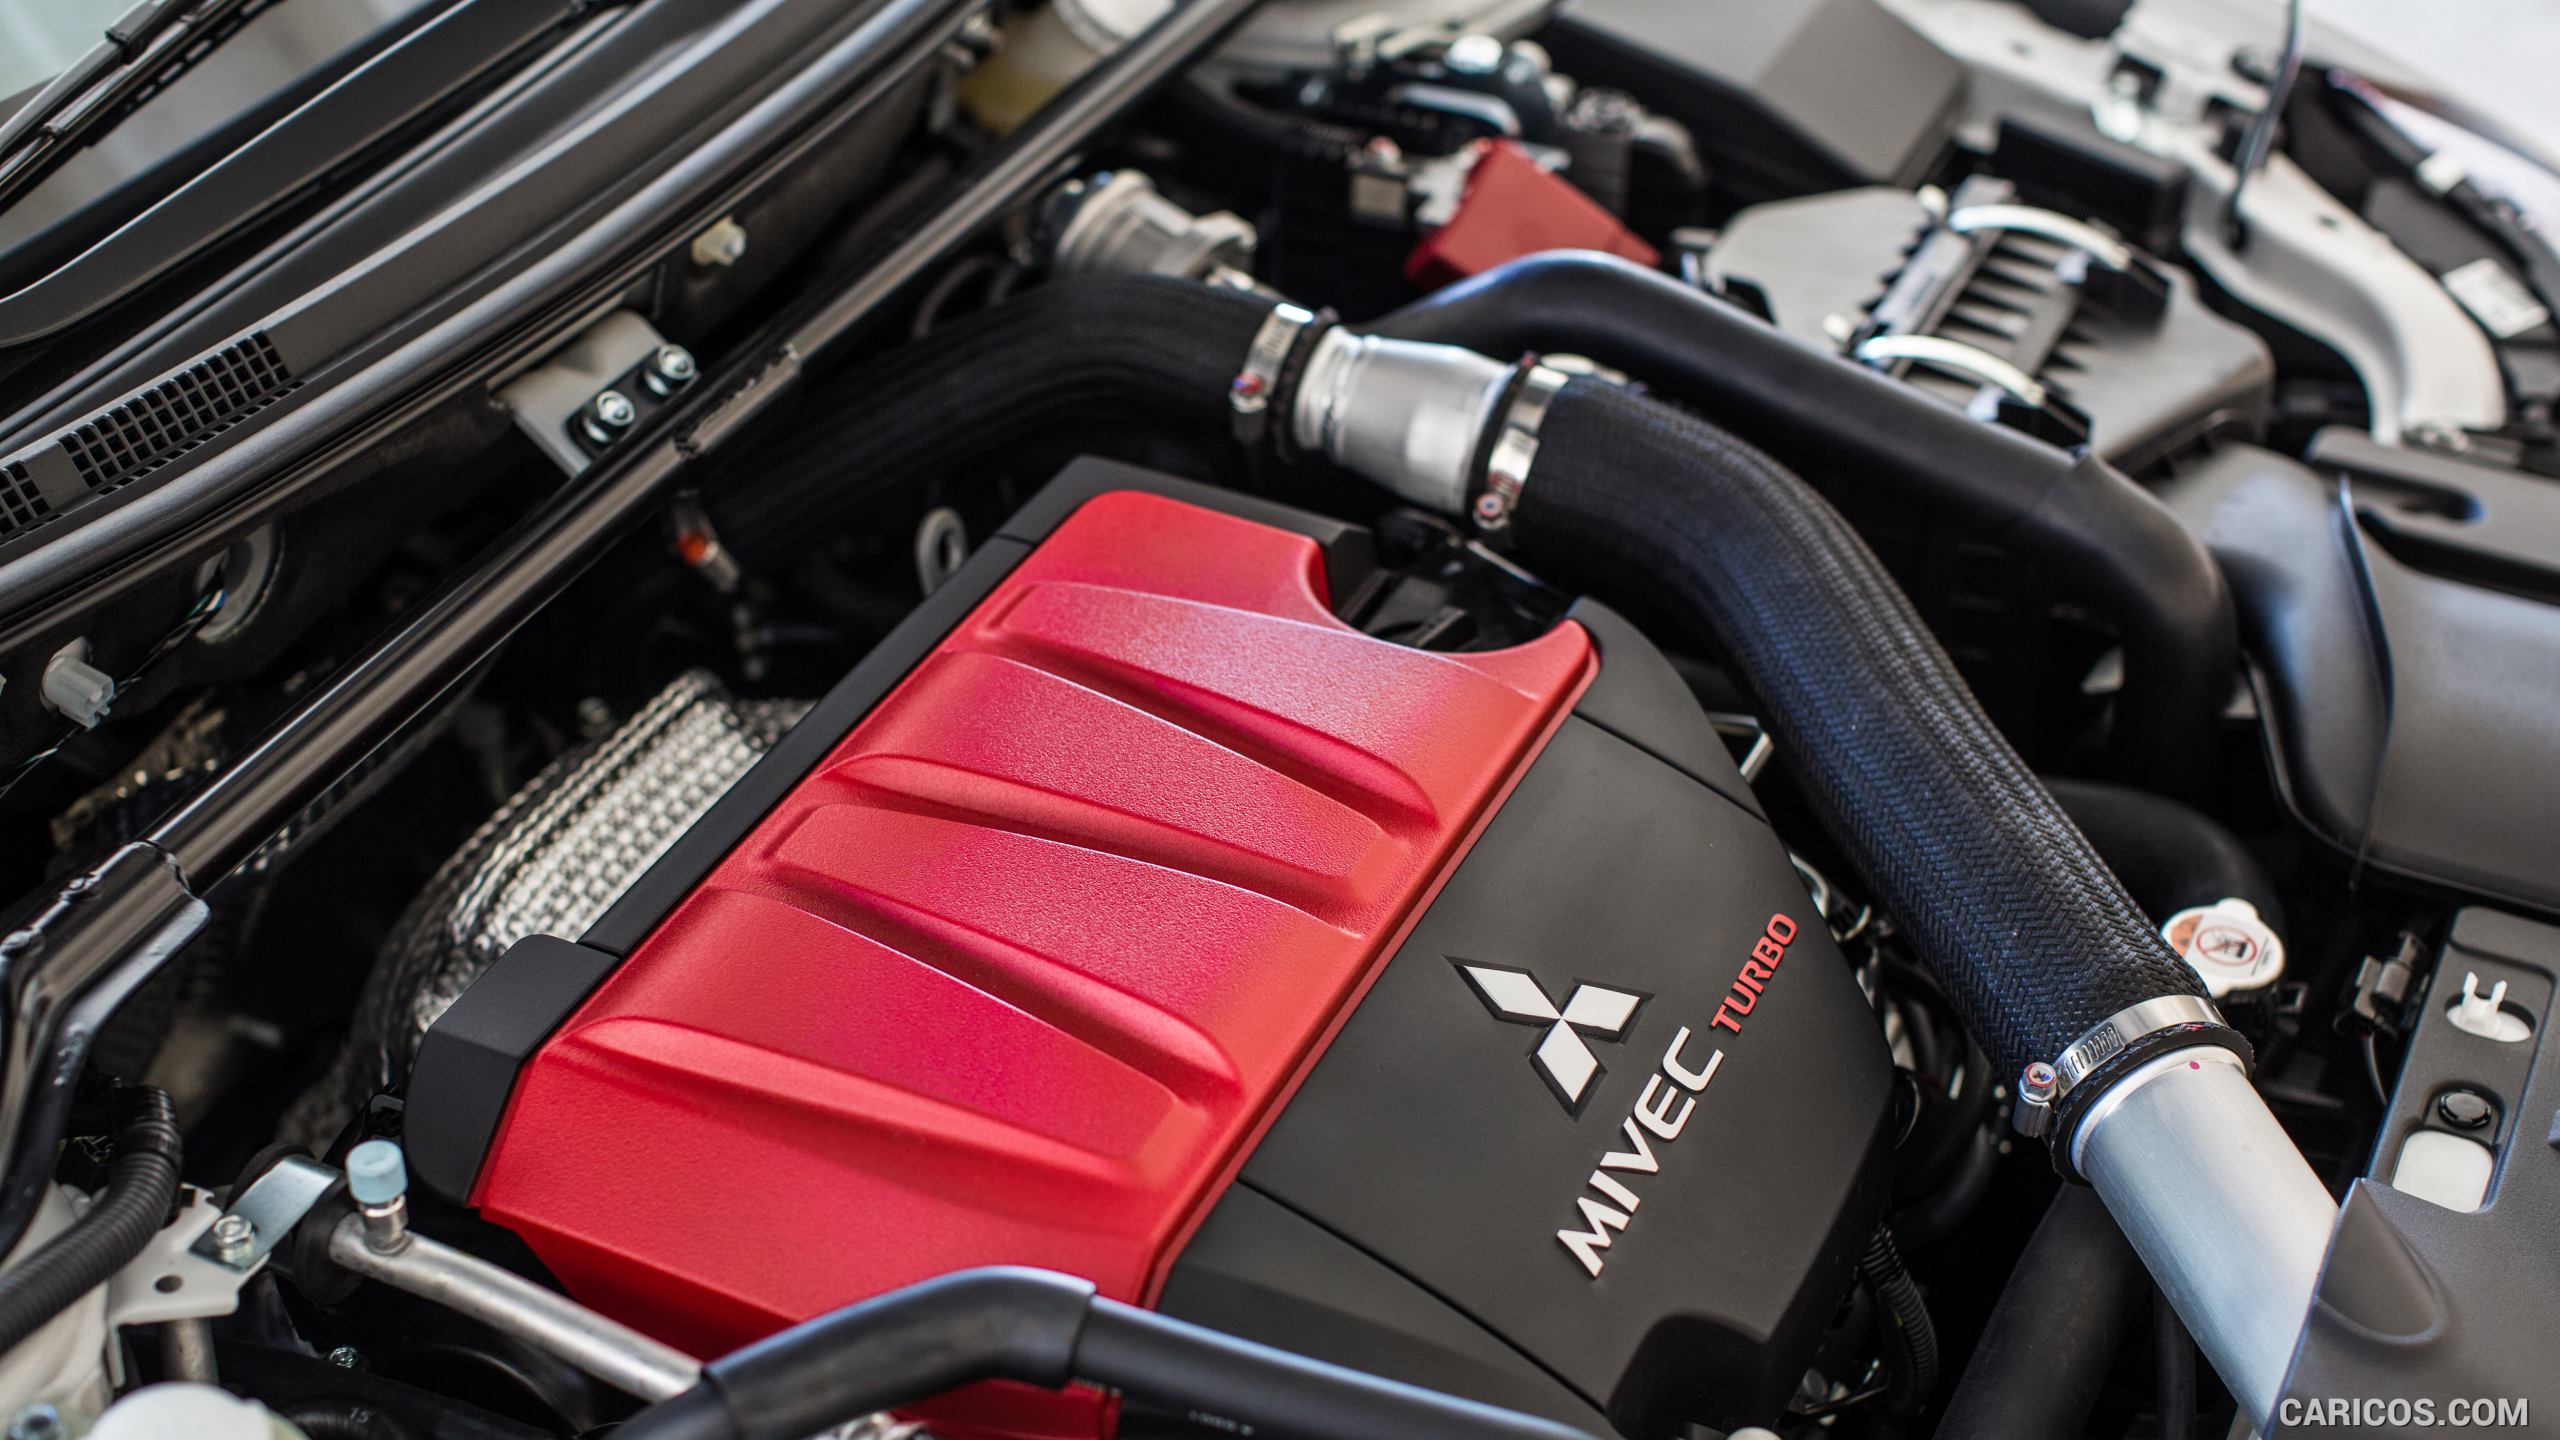 2015 Mitsubishi Lancer Evolution Final Edition - Engine, #17 of 30